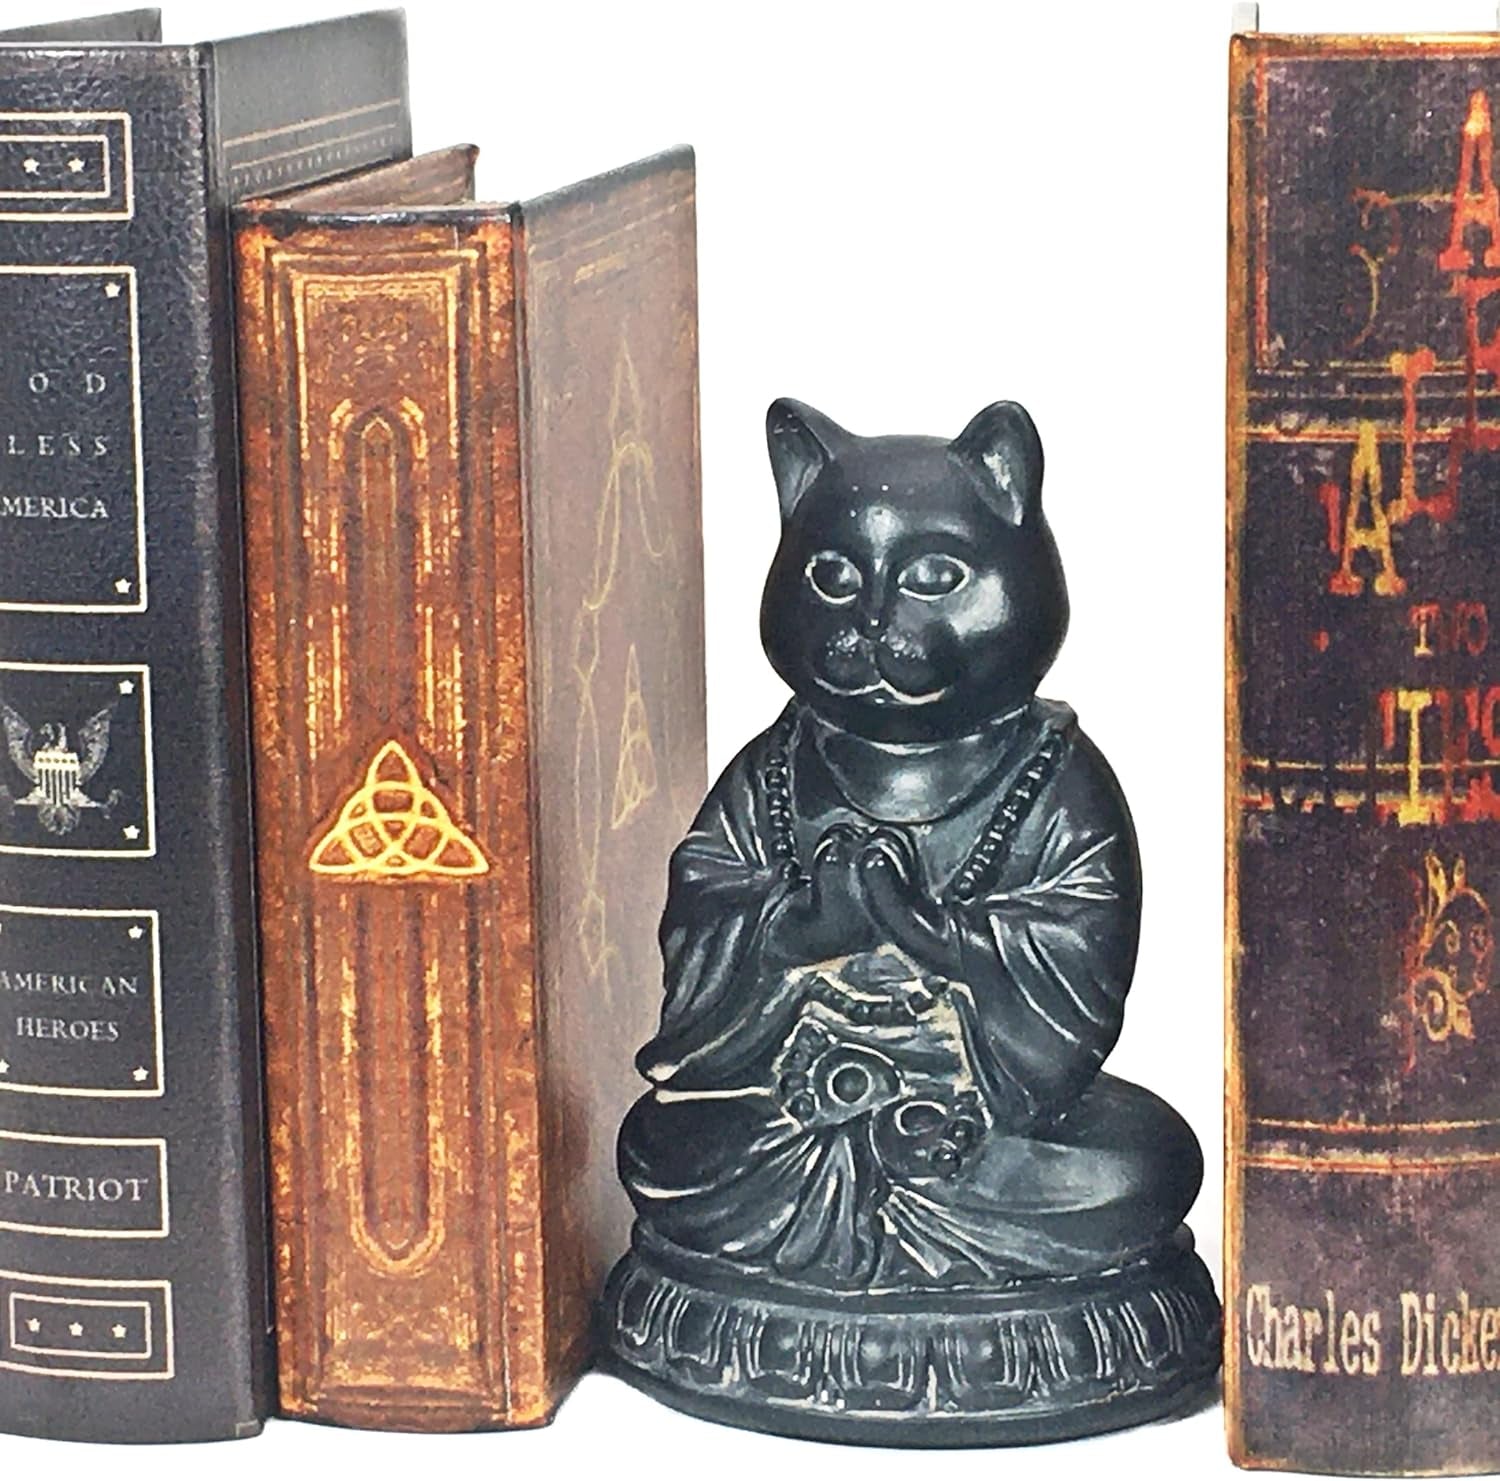 Cat Statue Kitten Cute Pet Yoga Zen Pose Dhyana Mudra Buddha Sculptures Collectible Vintage Figurines 6 Inch